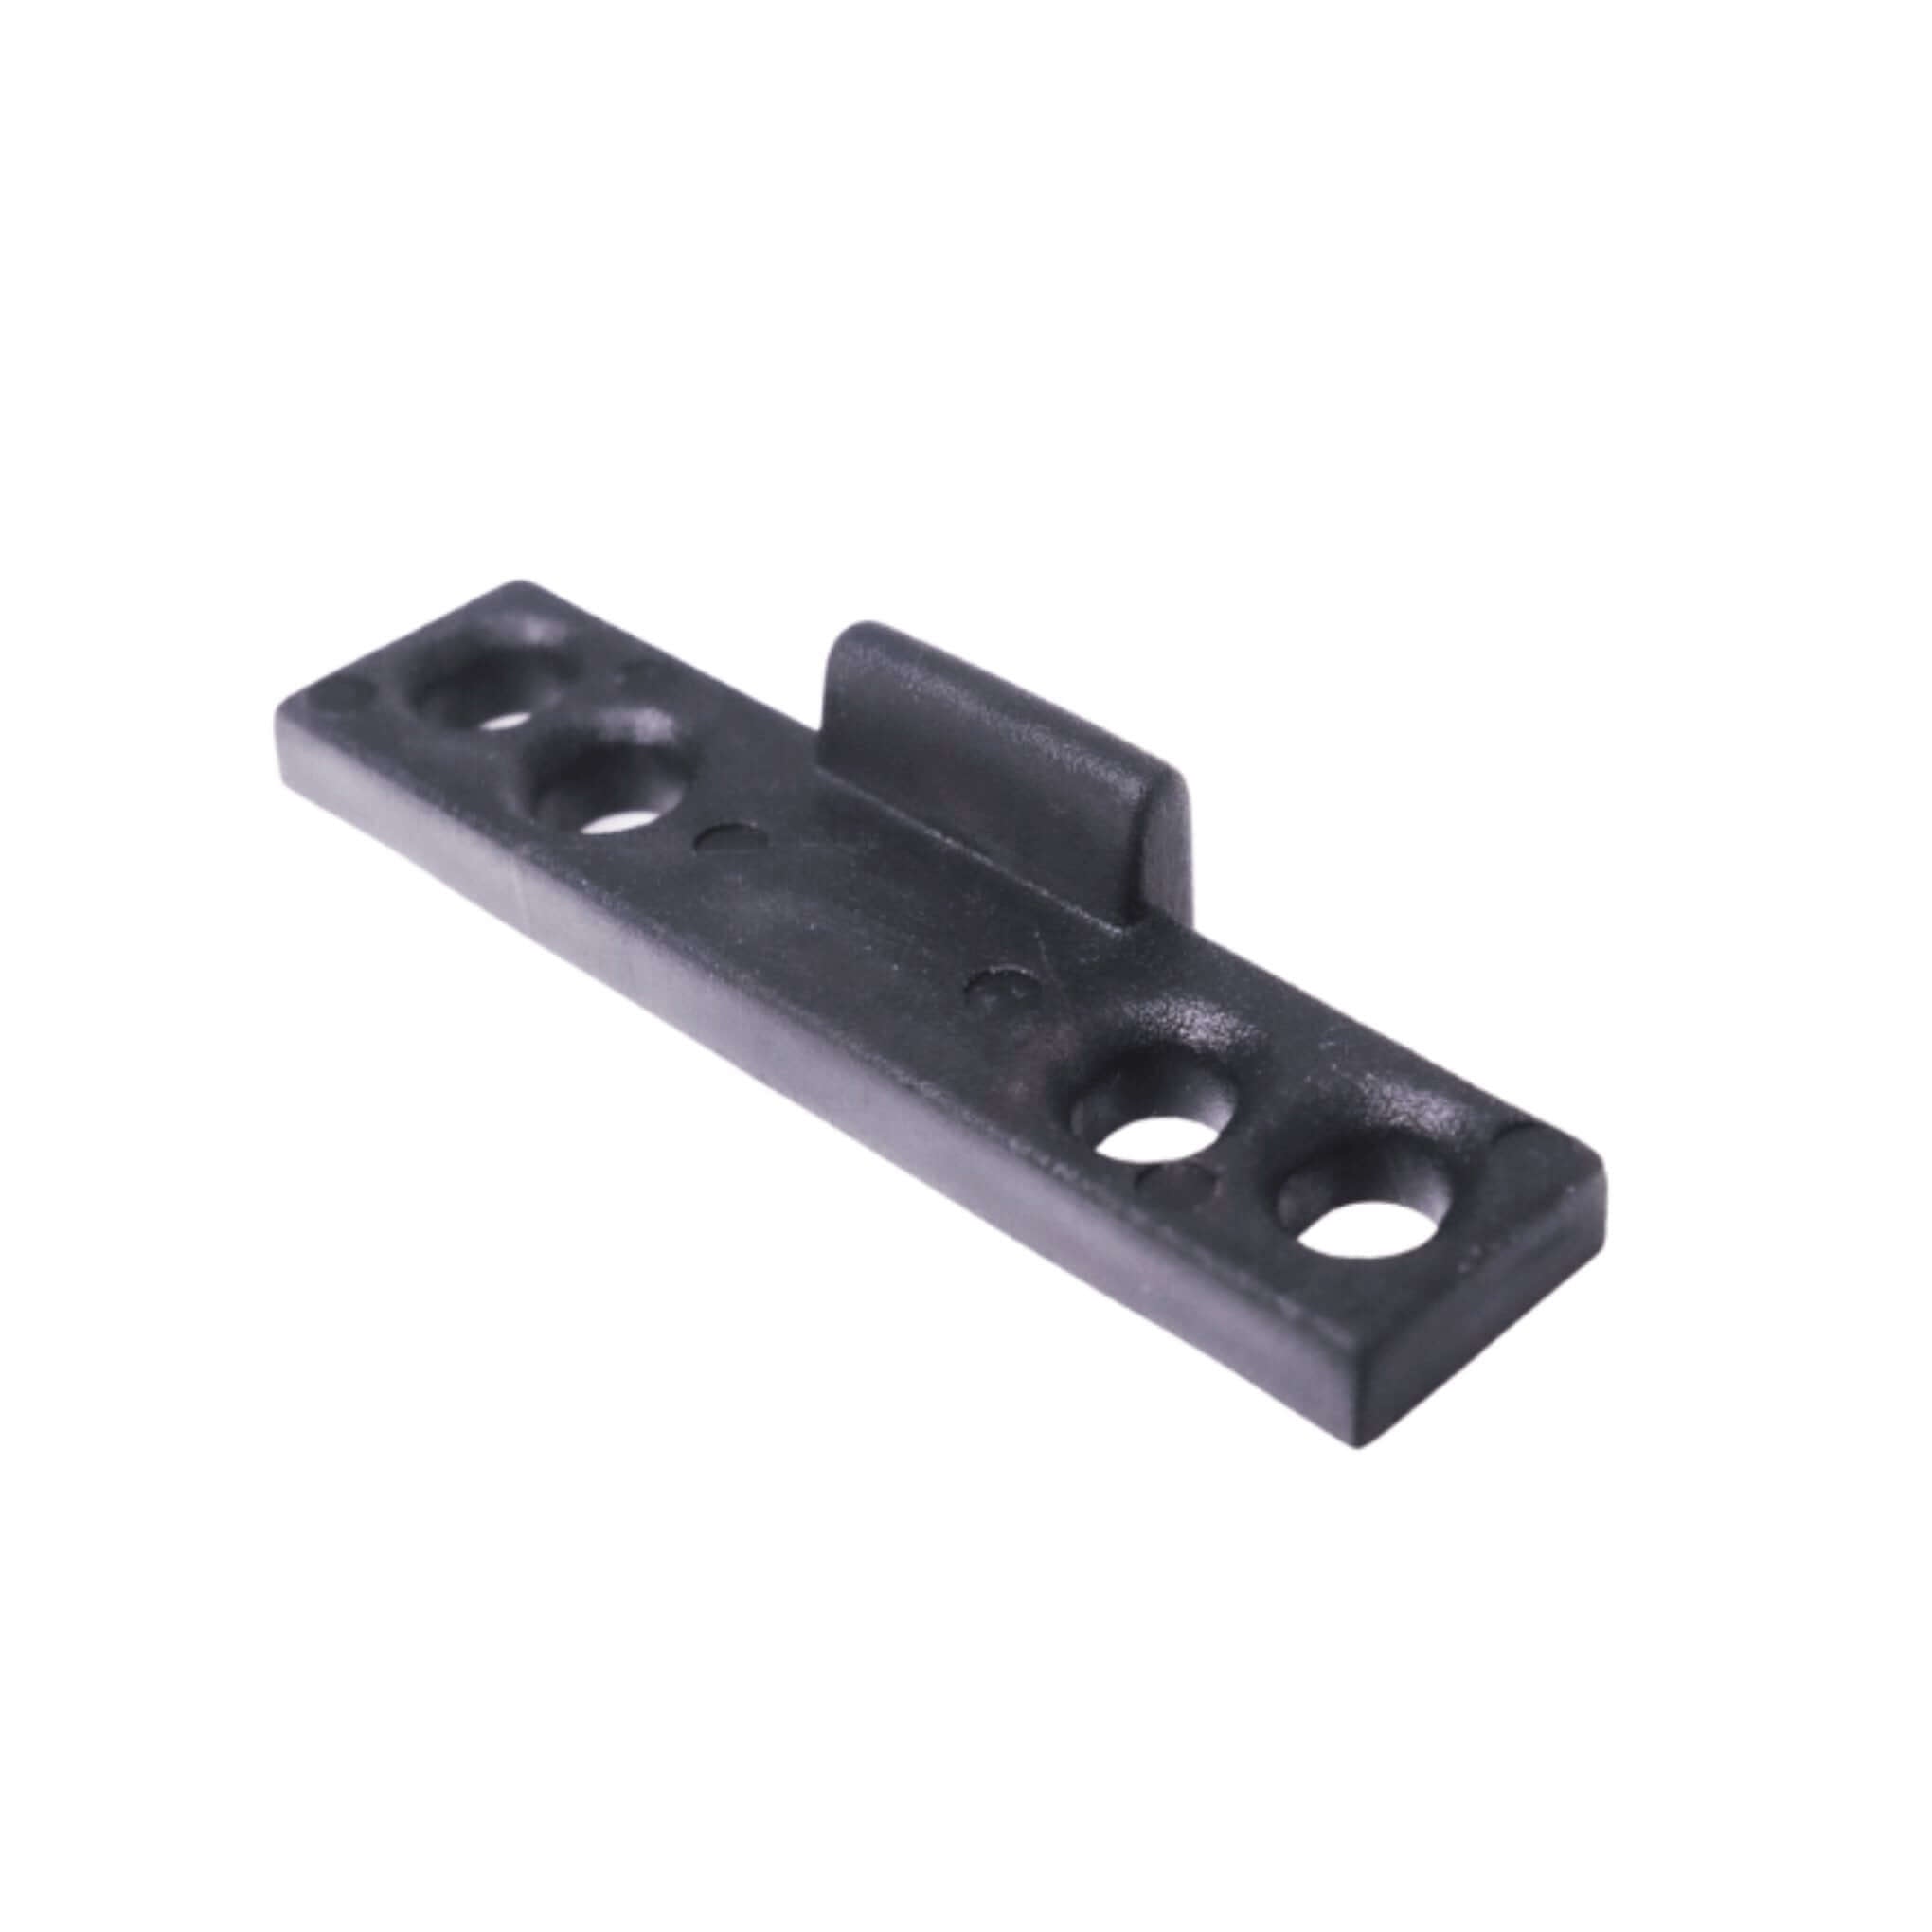 Caravan cupboard Door Lock Striker Plates (5 Pack) - Black, Adjustable, Italian Made - RV Essentials Australia